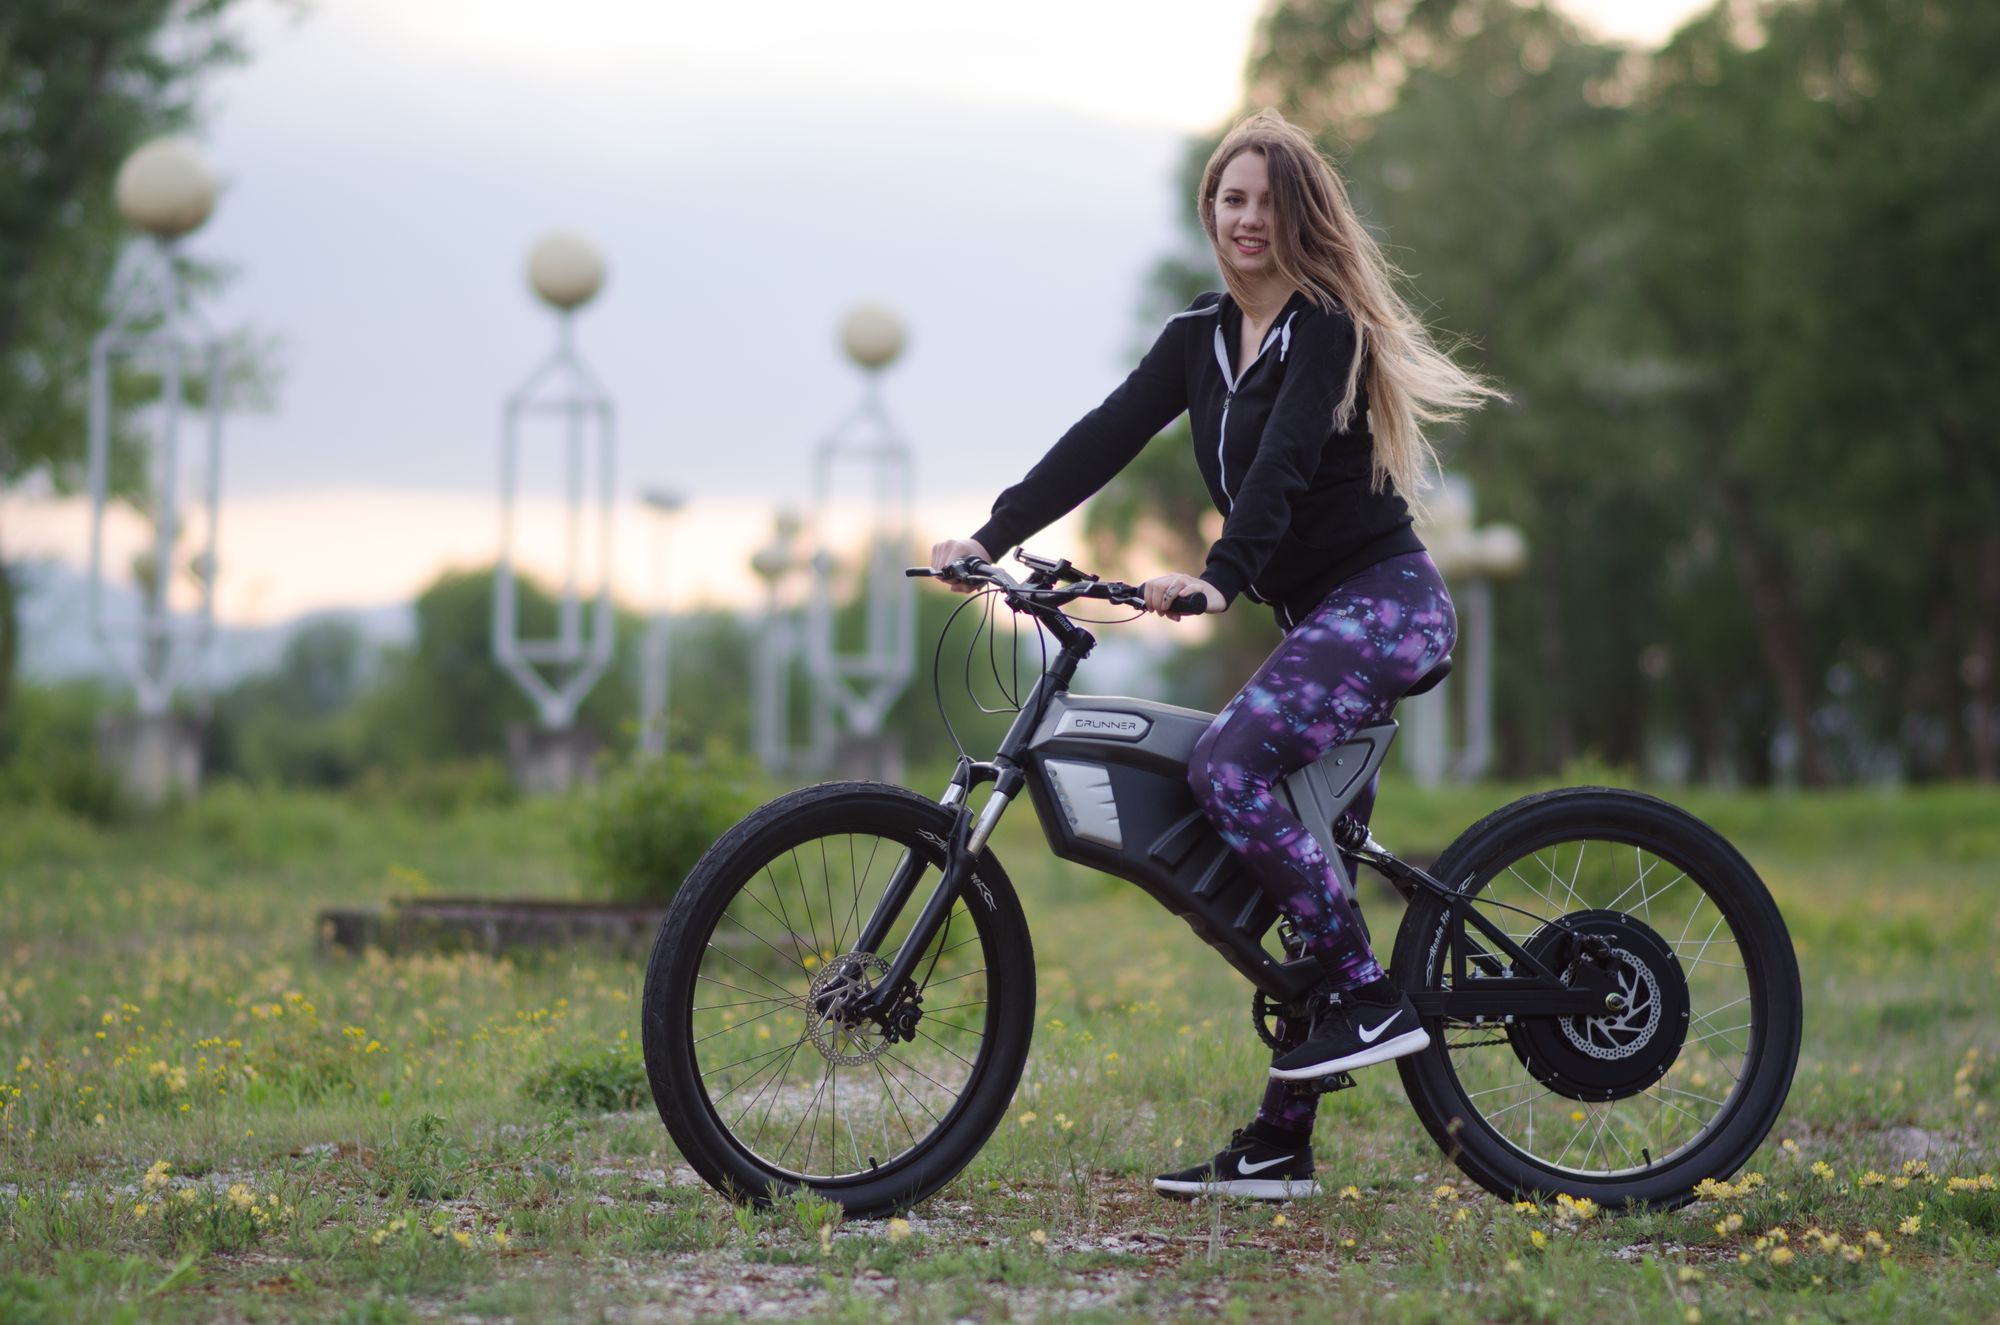 Croatian Electric Bike ‘Grunner’ Presented